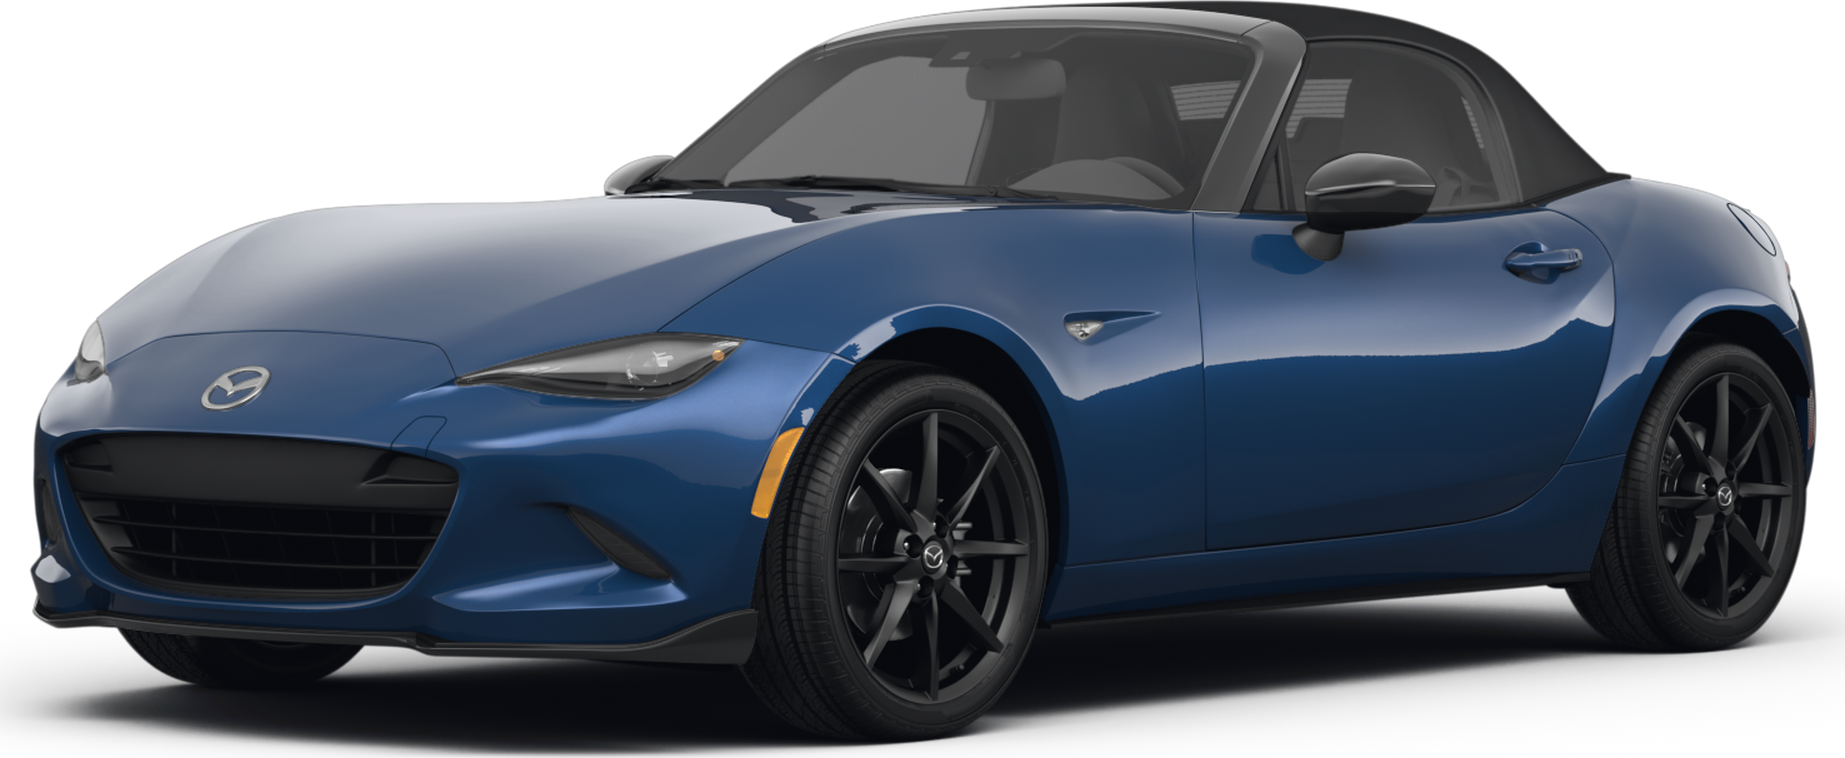 2023 Mazda MX-5 Miata: Pricing and Packaging - Nov 17, 2022